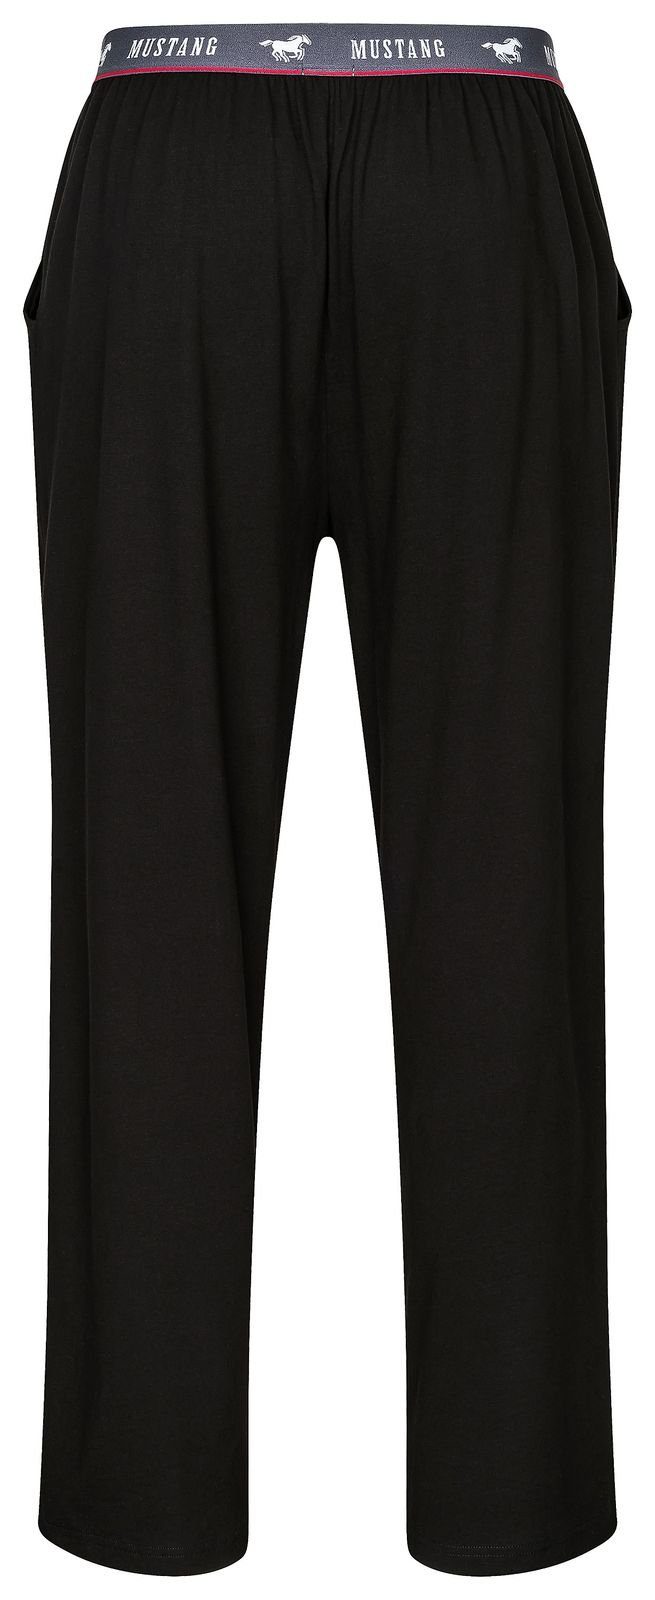 MUSTANG Loungepants Long Pants Mustangbranding schwarz Hose Lounge roter Kontraststreifen und Freizeithose Trousers